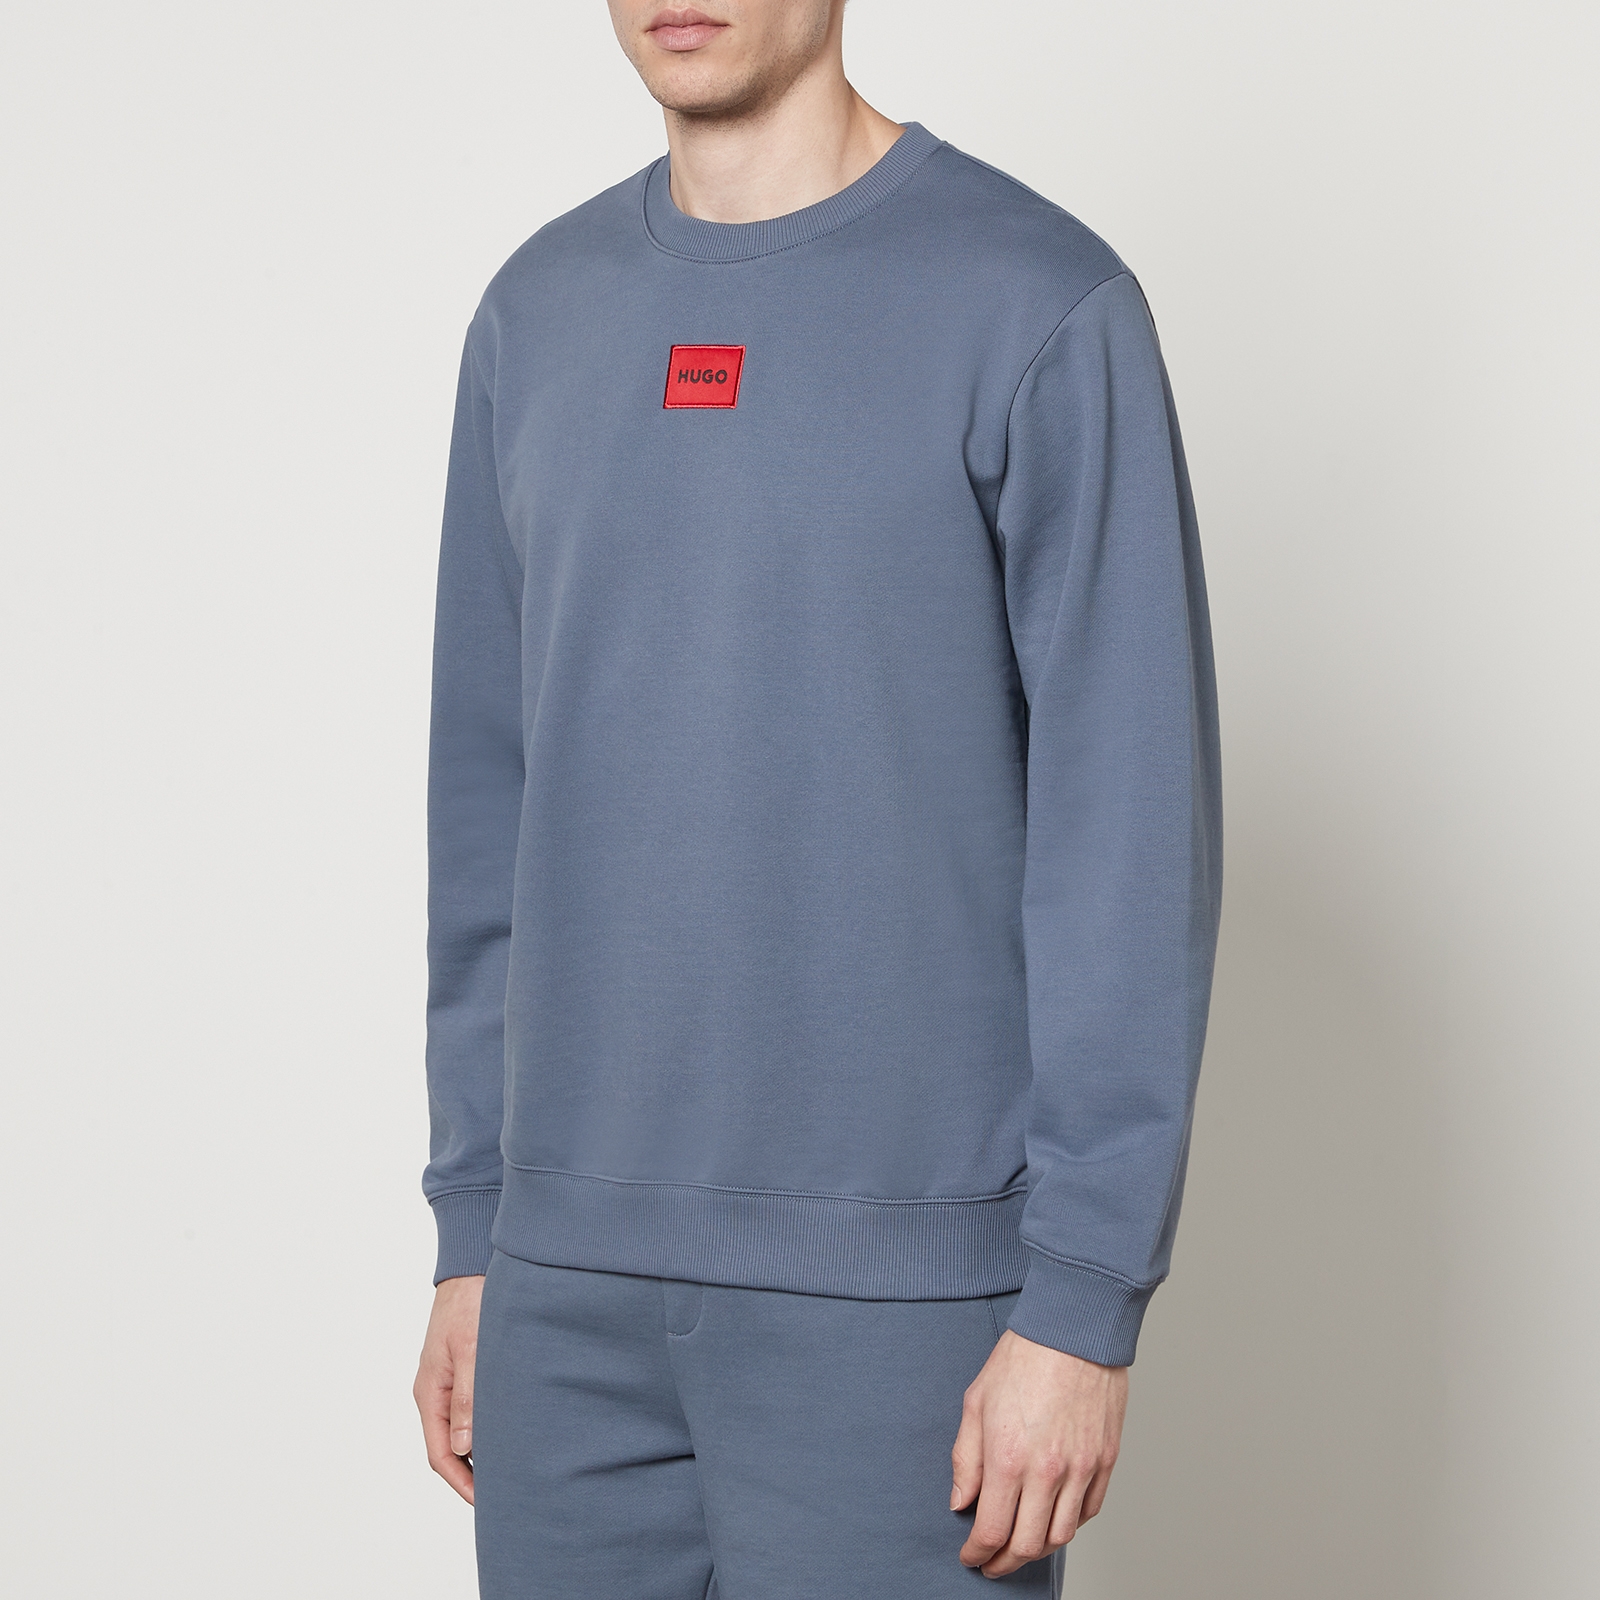 HUGO Diragol212 Cotton-Blend Jersey Sweatshirt